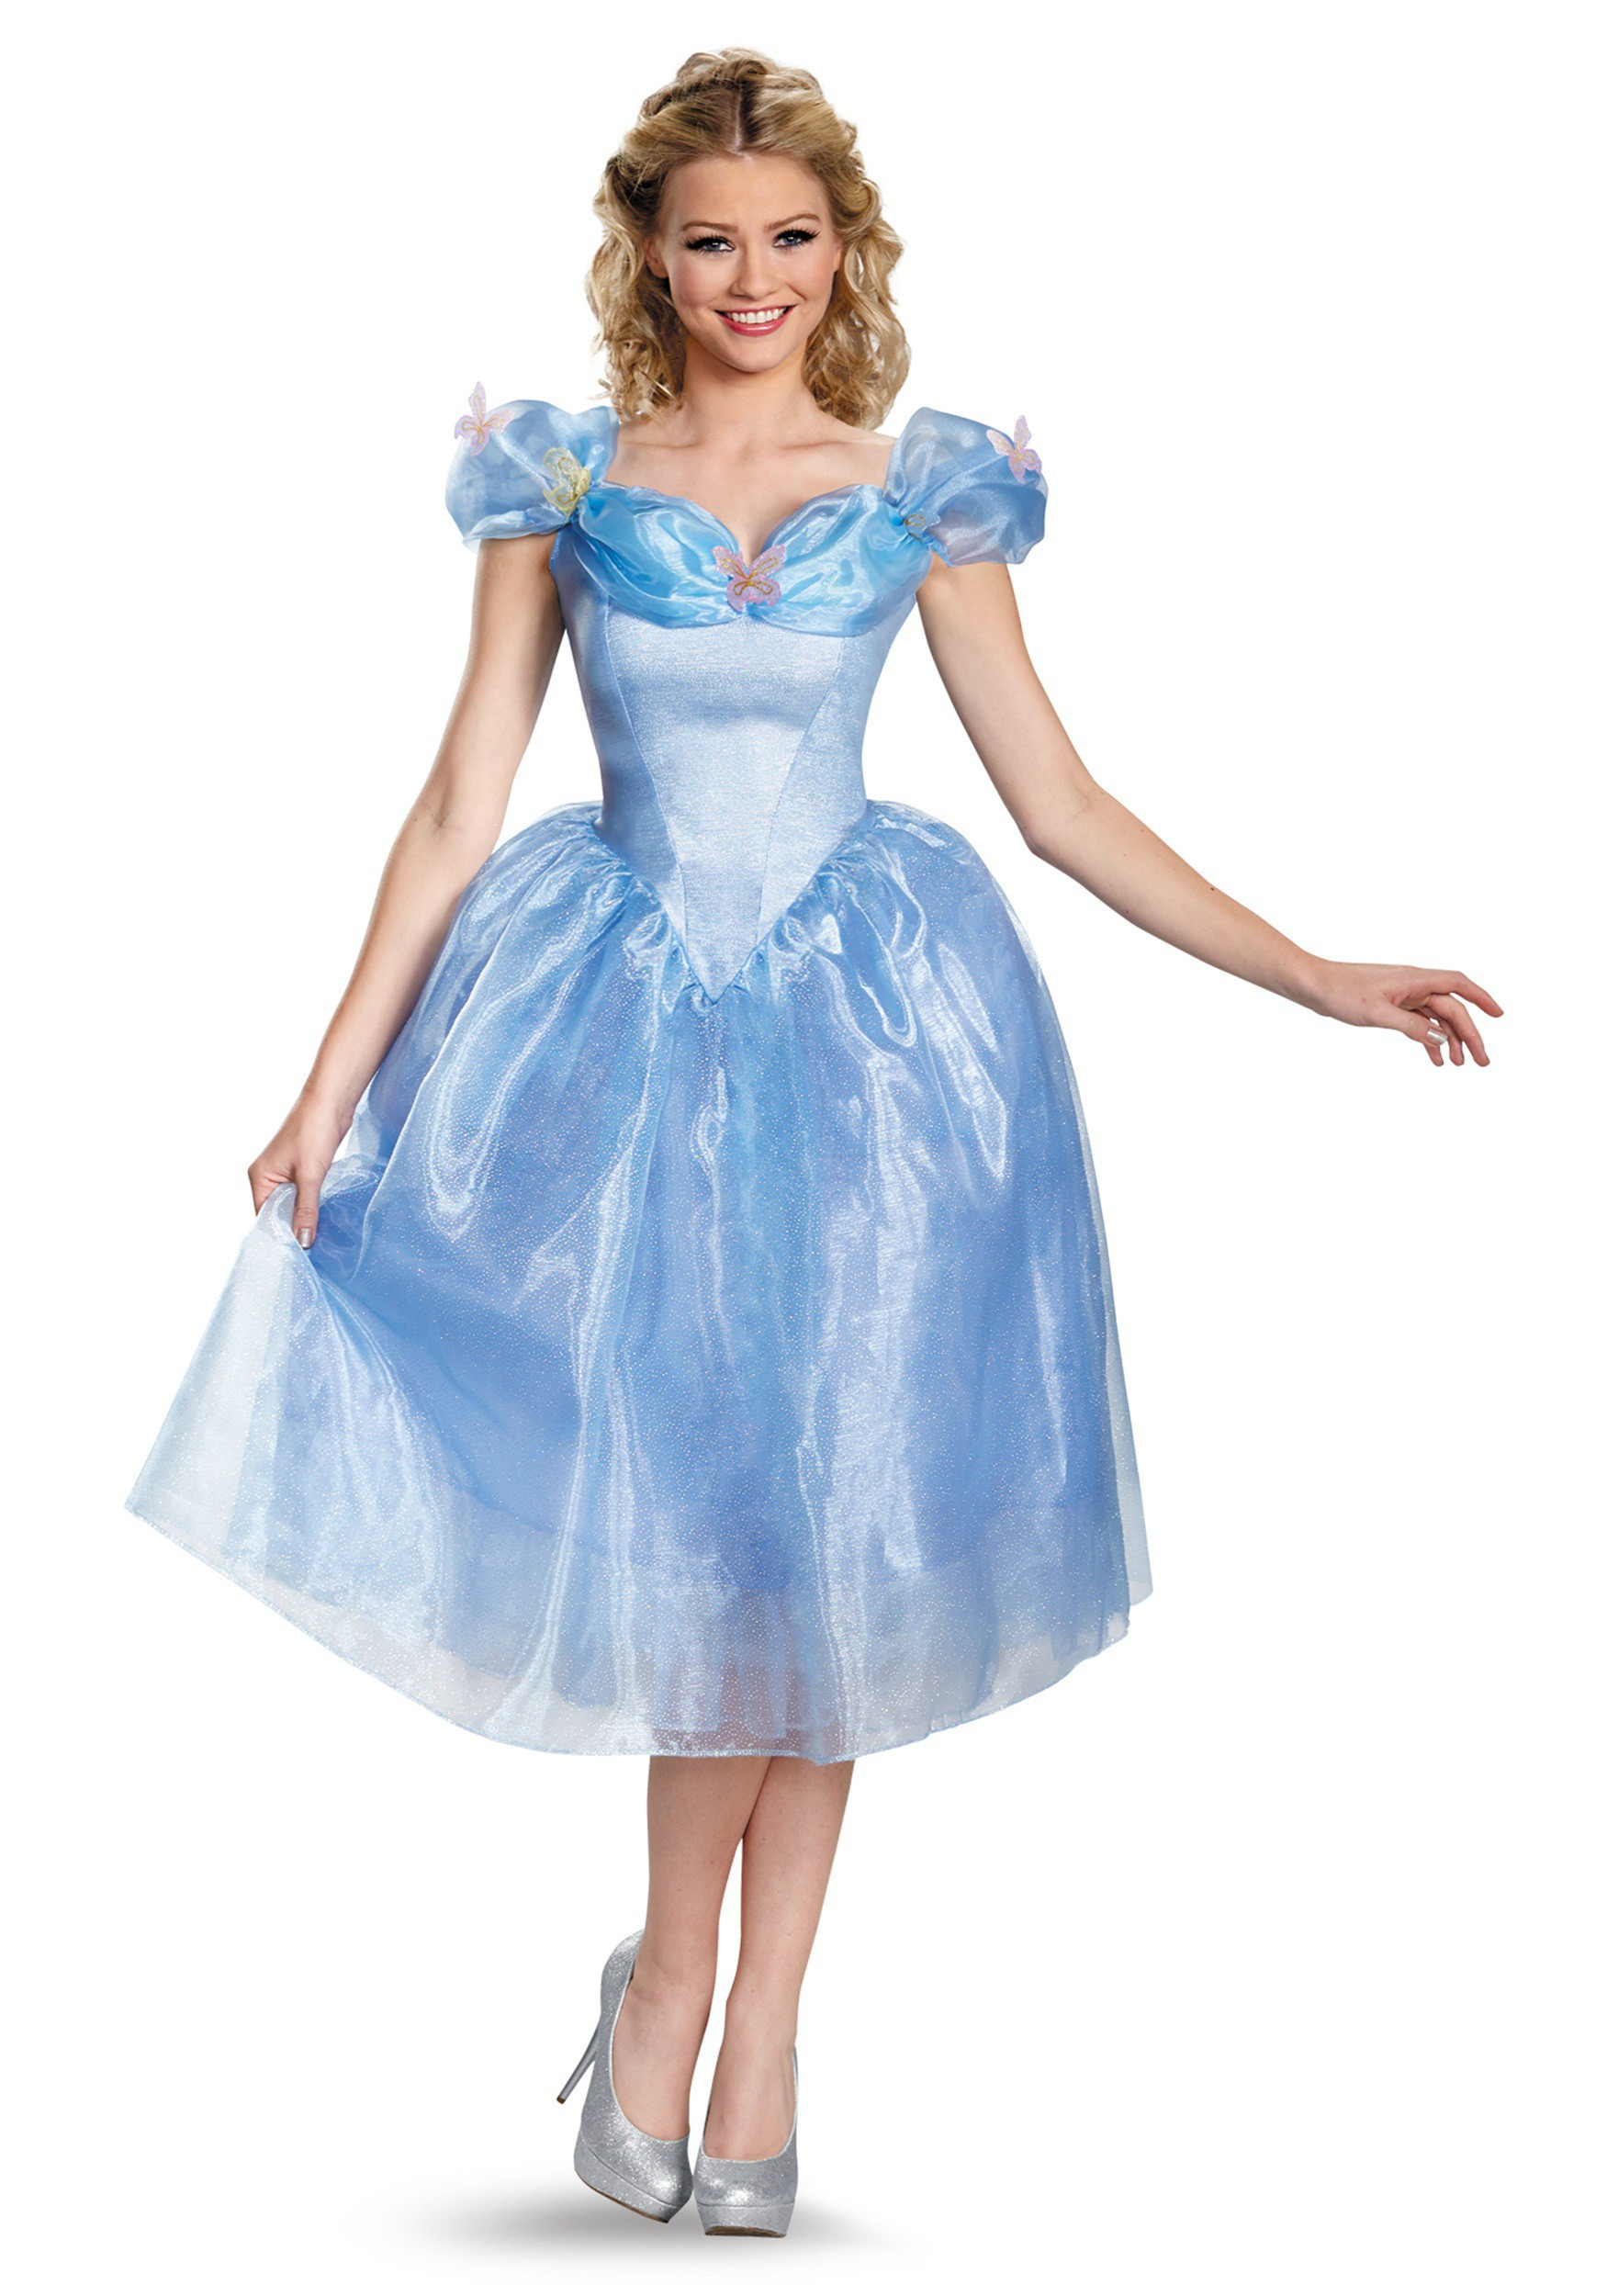 Cinderella DIY Costumes
 Women s Deluxe Cinderella Movie Costume